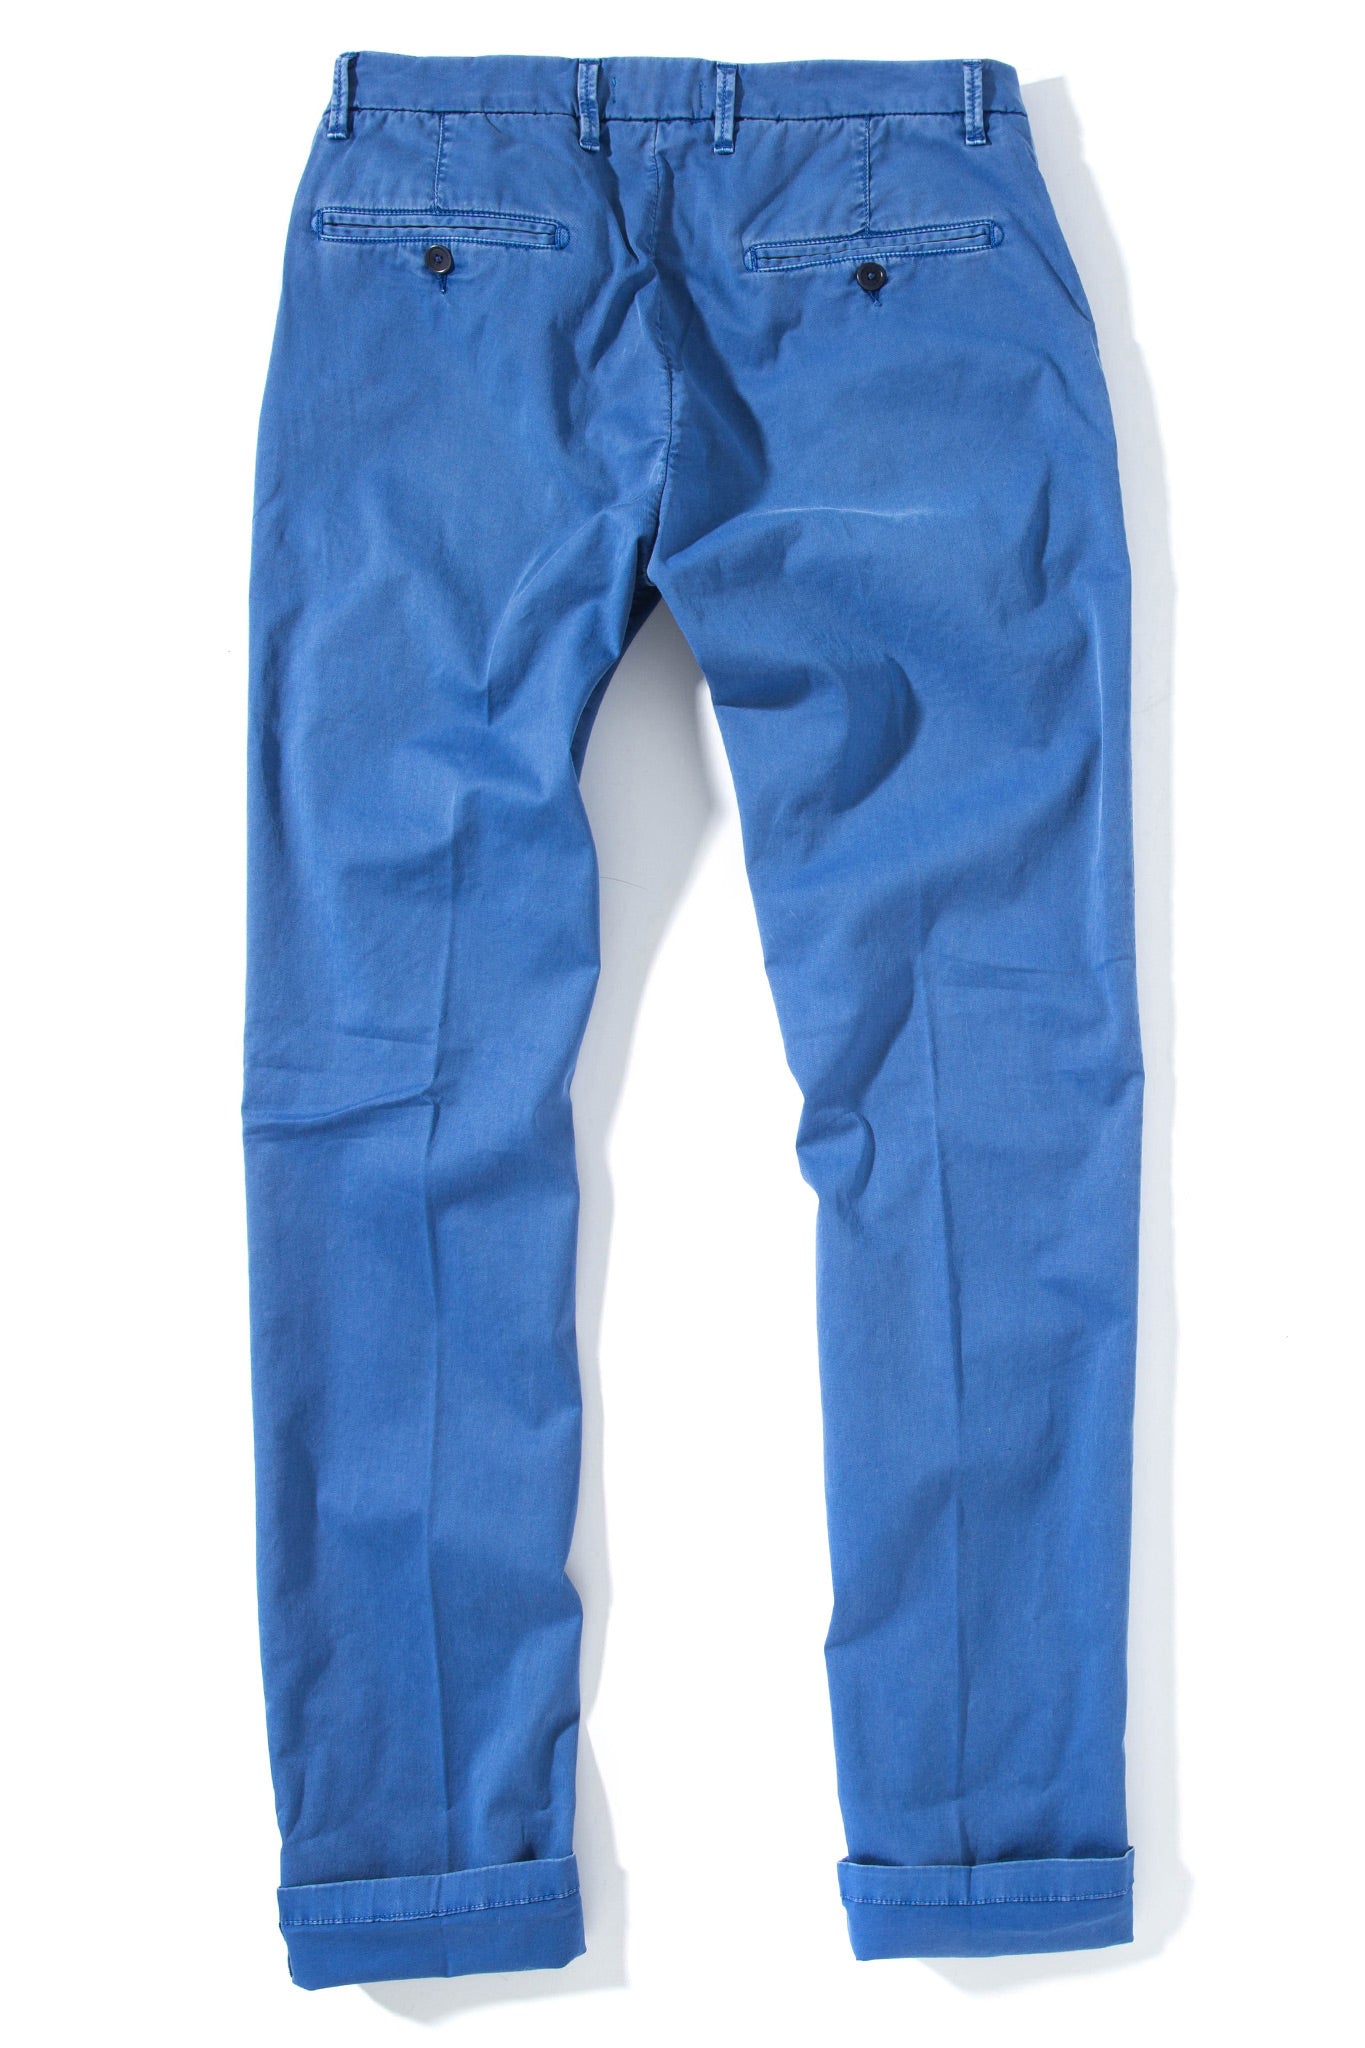 Tempe 4 Pocket In Royal Blue | Mens - Pants - 4 Pocket | Axels Premium Denim